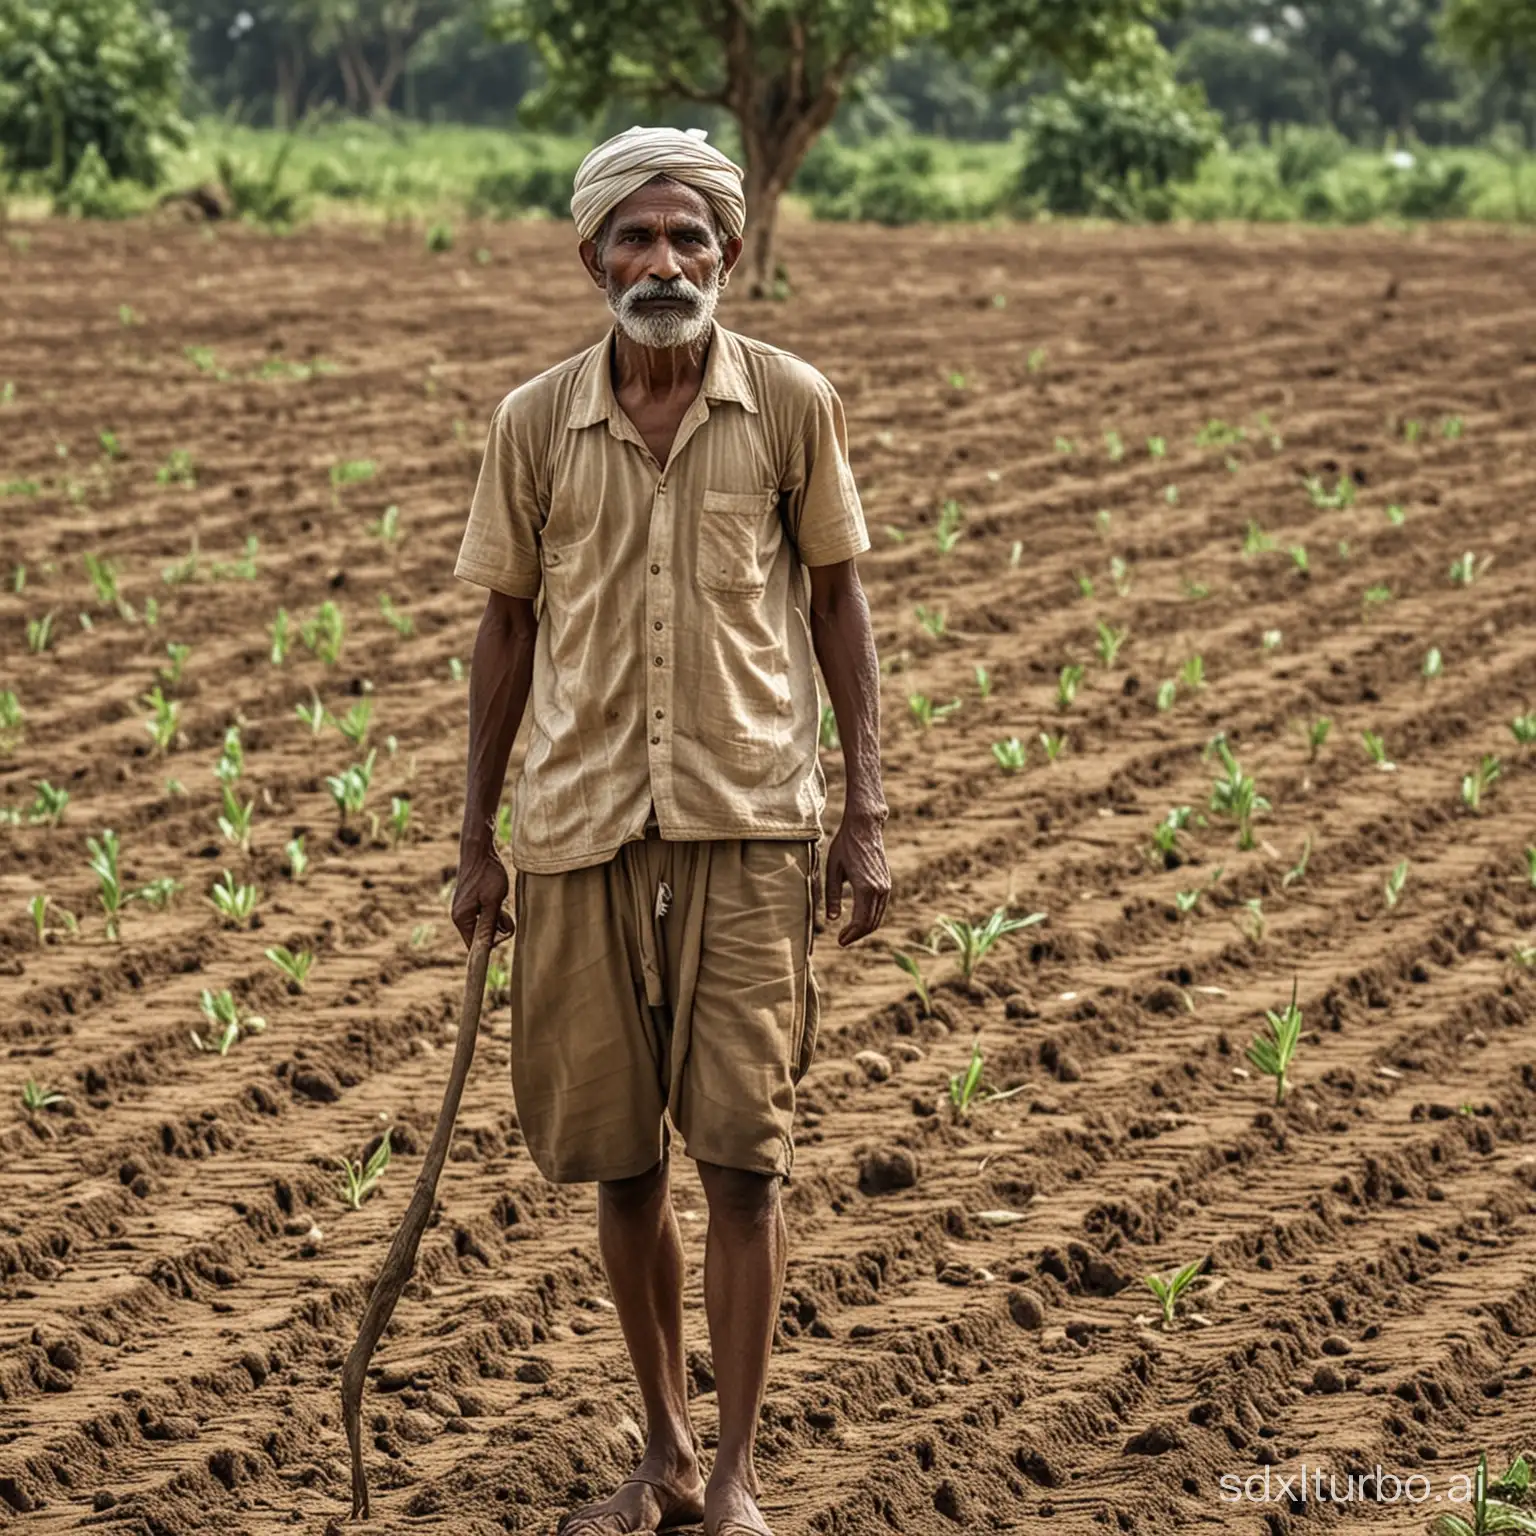 Hardworking-Indian-Farmer-Tending-to-Crops-in-Rural-Setting